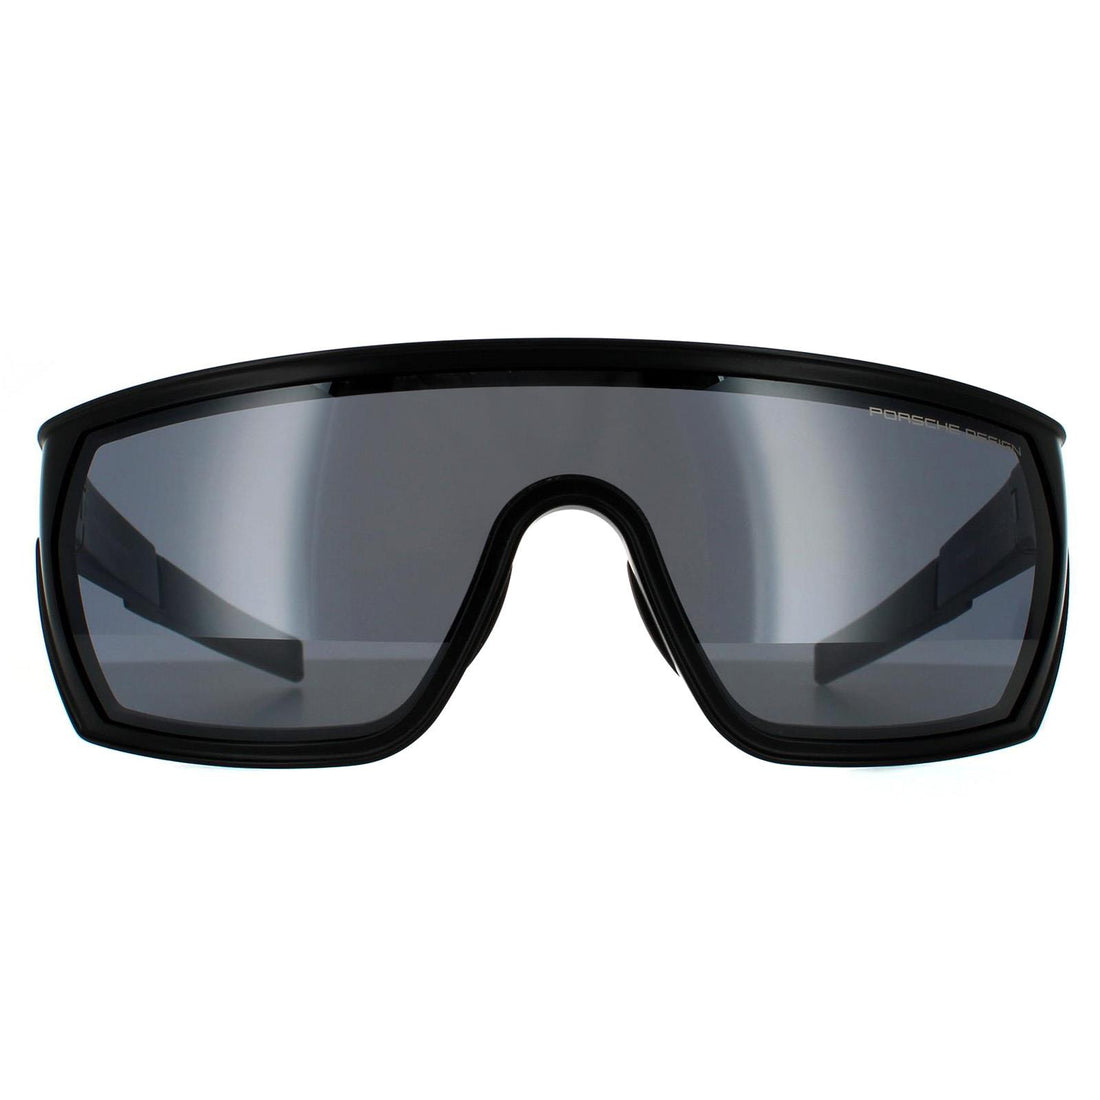 Porsche Design P8668 Sunglasses Black / Blue Mirror Black